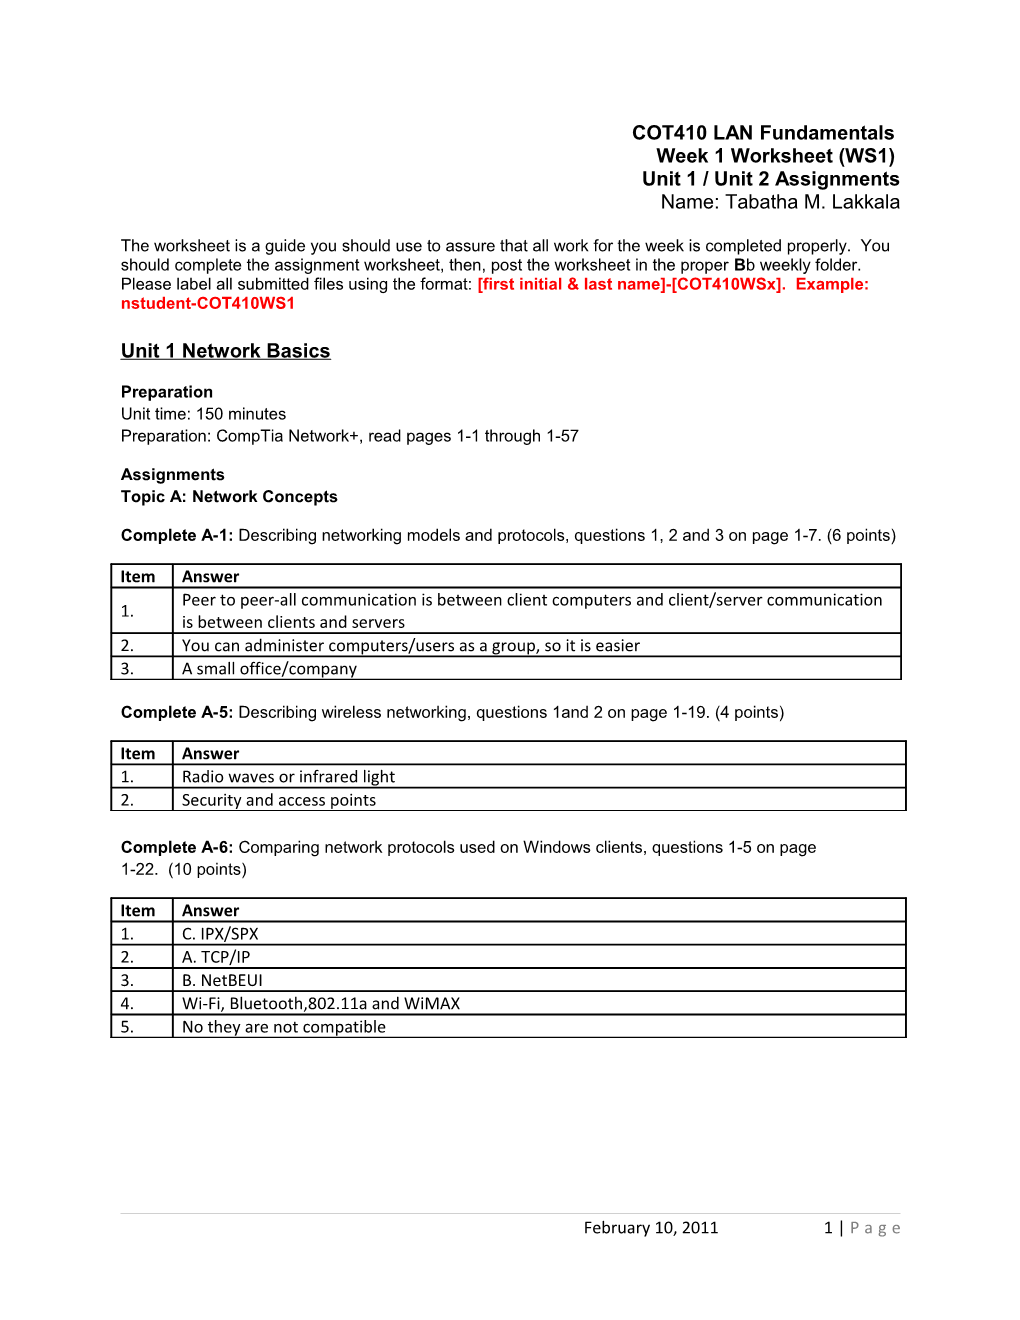 COT410 LAN Fundamentals Week 1 Worksheet (WS1) Unit 1 / Unit 2 Assignments Name: Tabatha